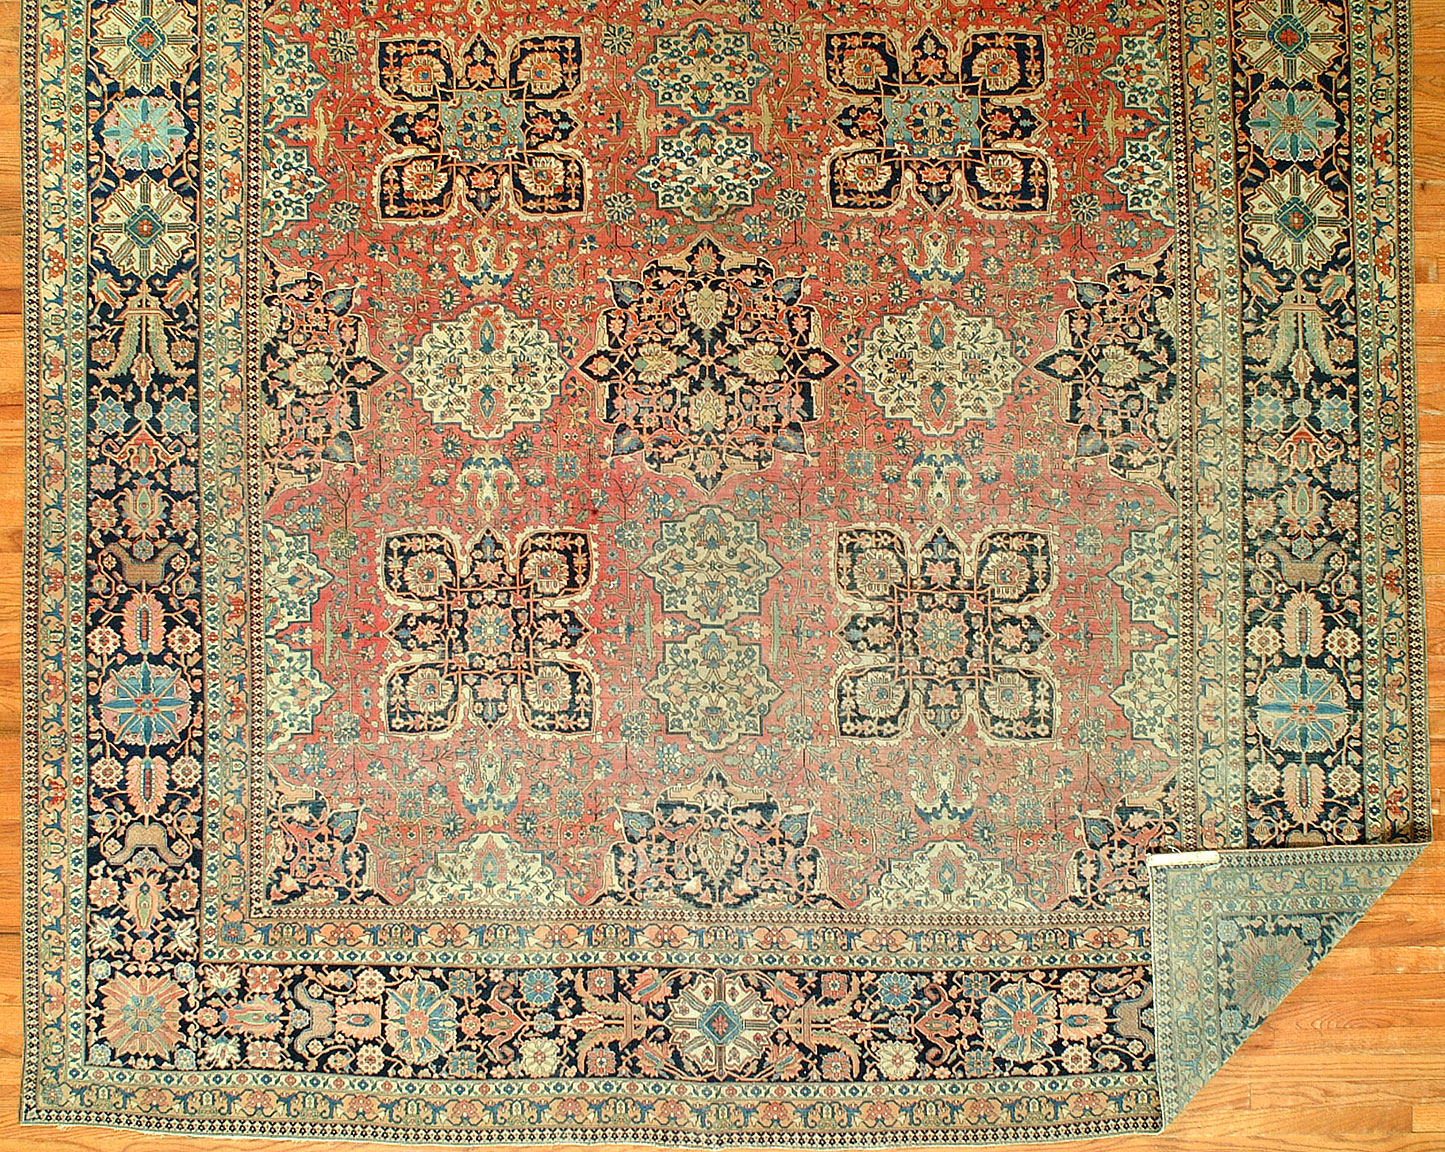 Antique kashan, mohtasham Carpet - # 52130